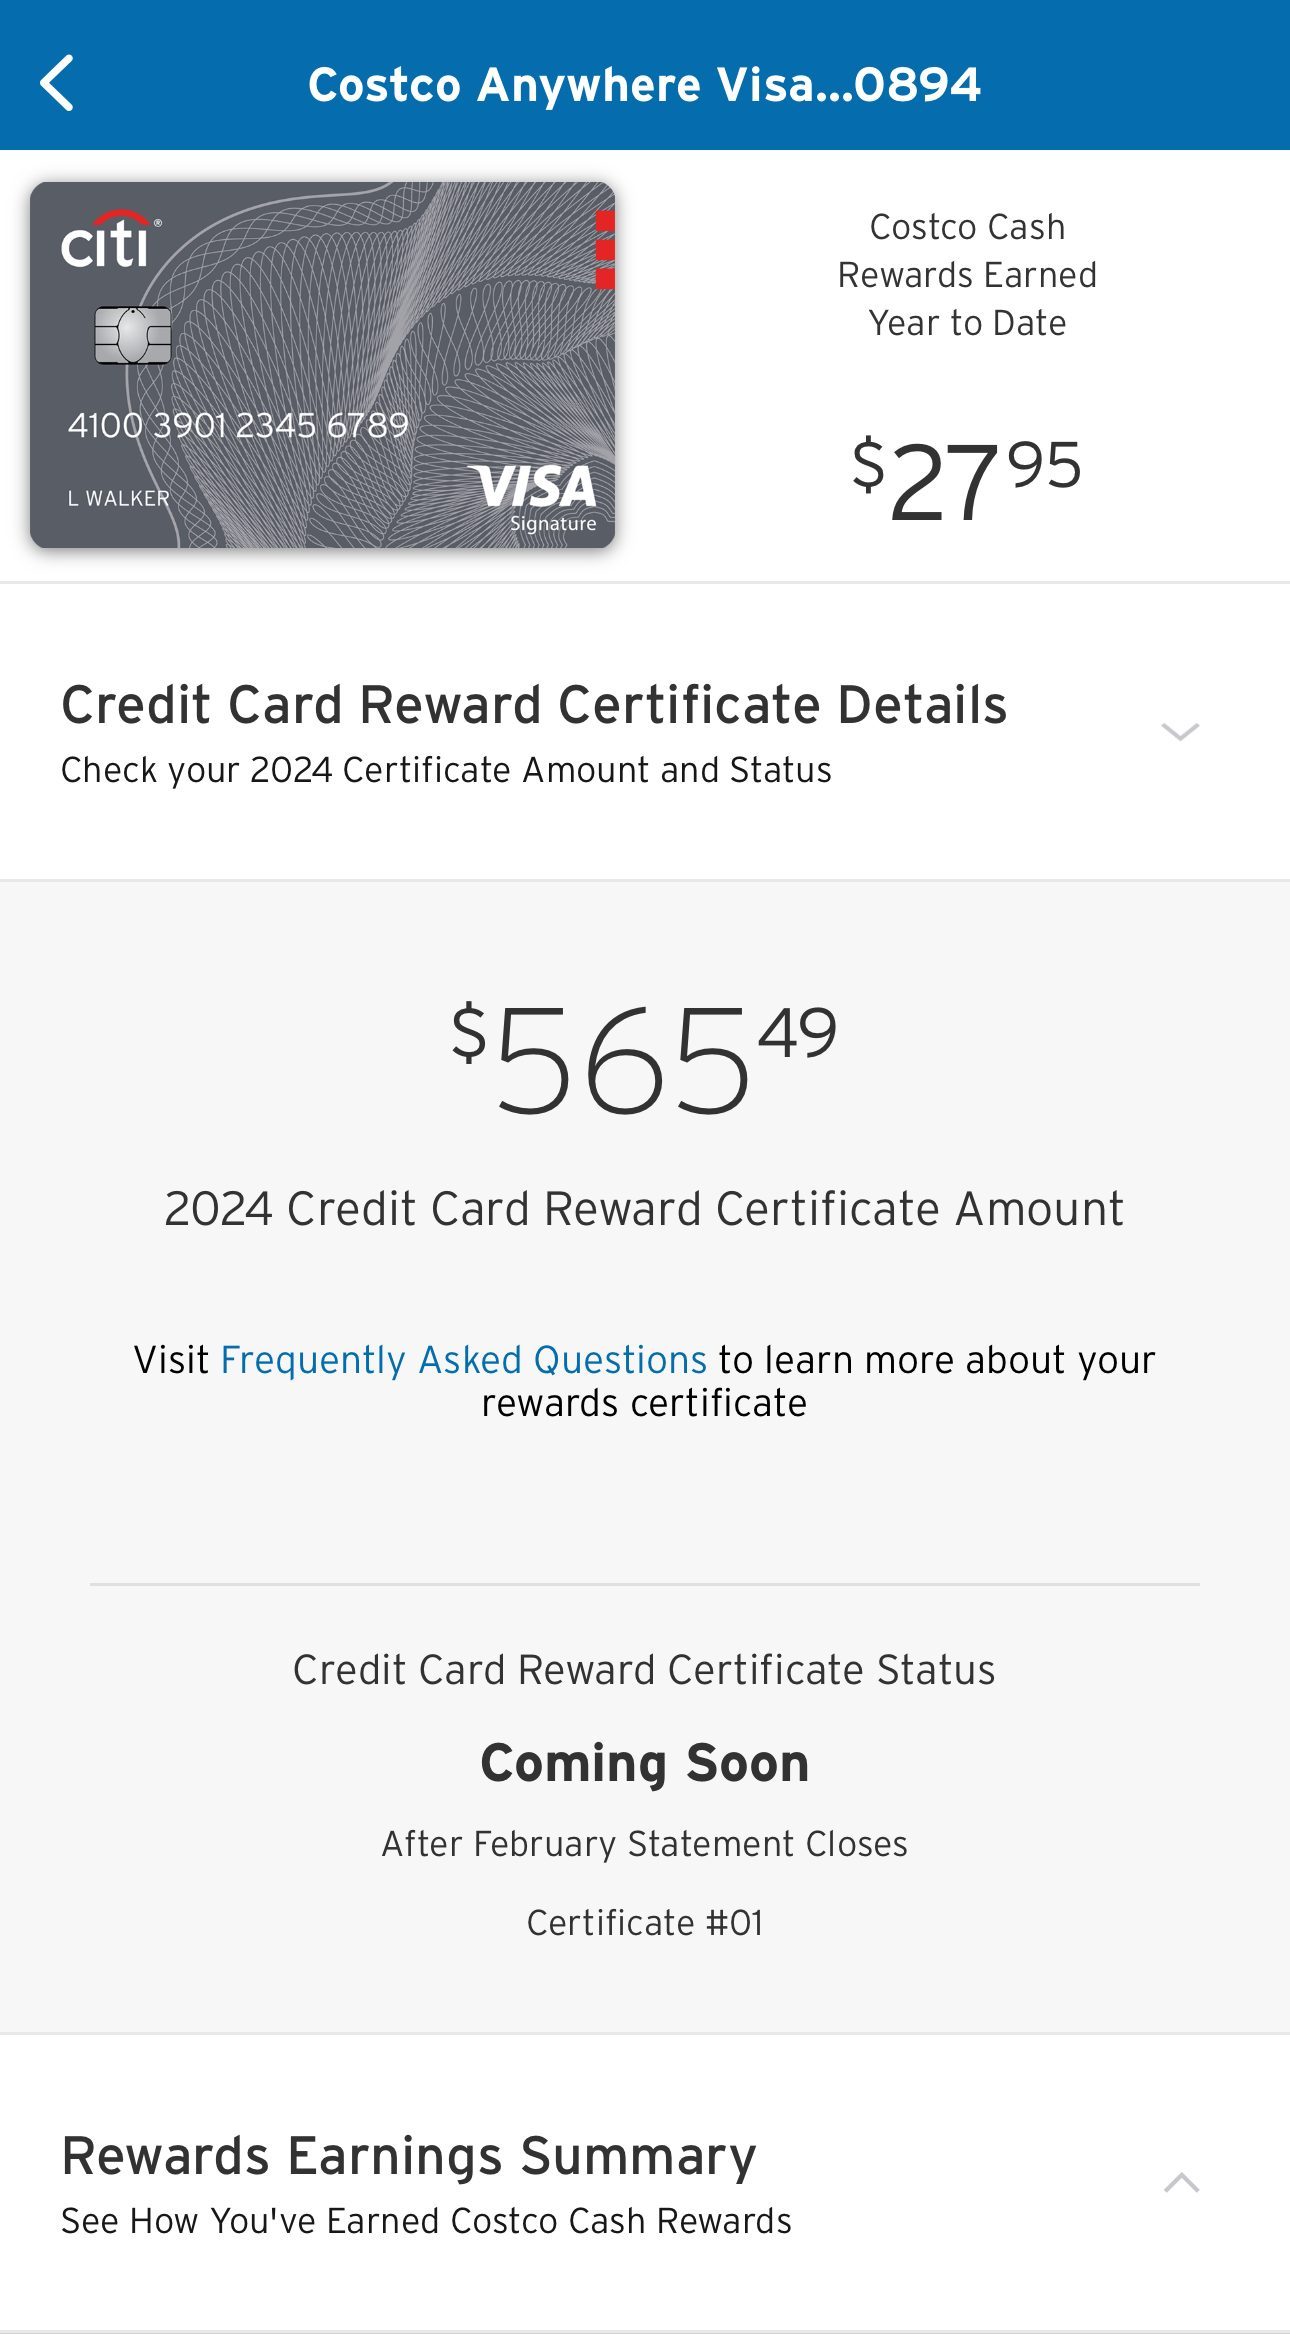 Costco credit card rewards certificate status